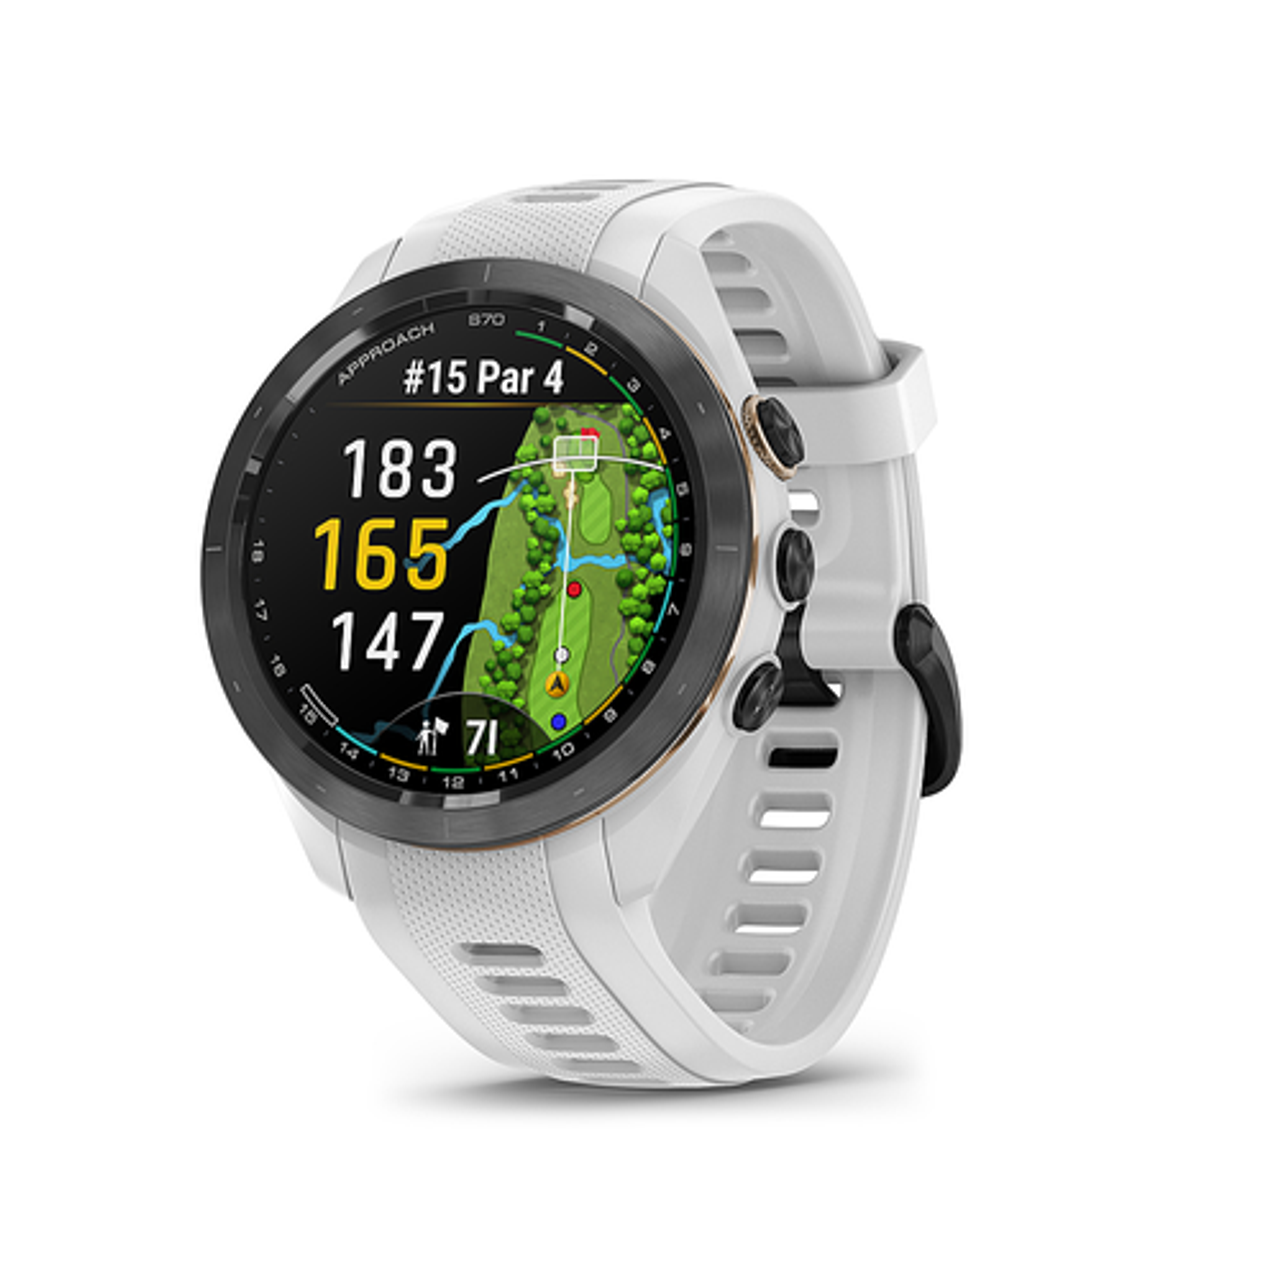 Garmin - Approach S70 GPS Smartwatch 42mm Ceramic - Black Ceramic Bezel with White Silicone Band